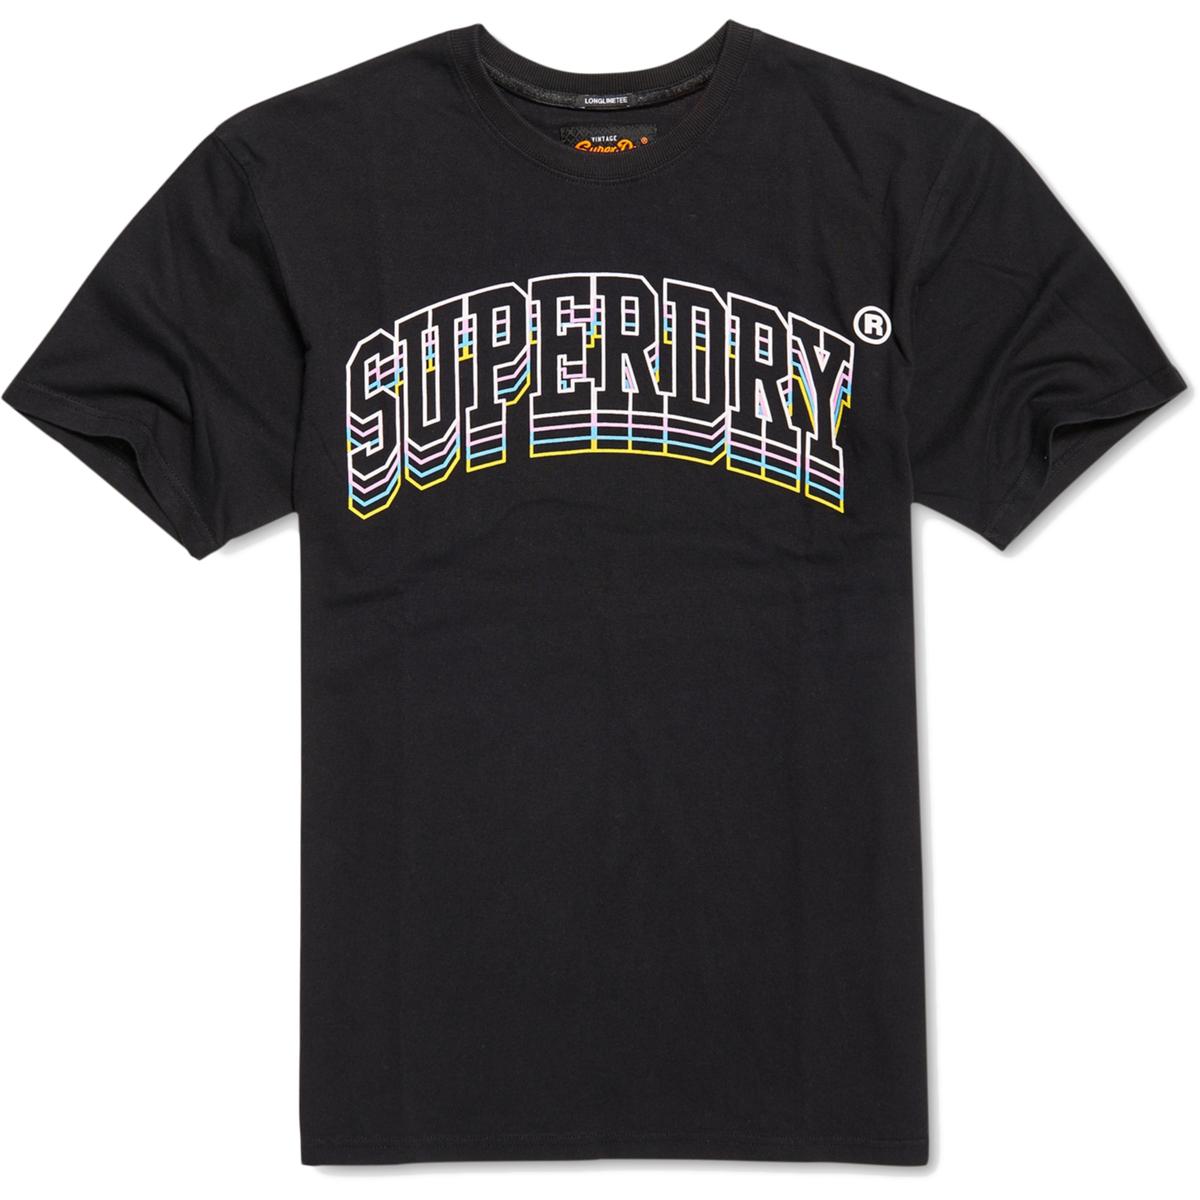 Superdry Mens Black Graphic Logo Tee T-Shirt Top XL BHFO 6173 | eBay